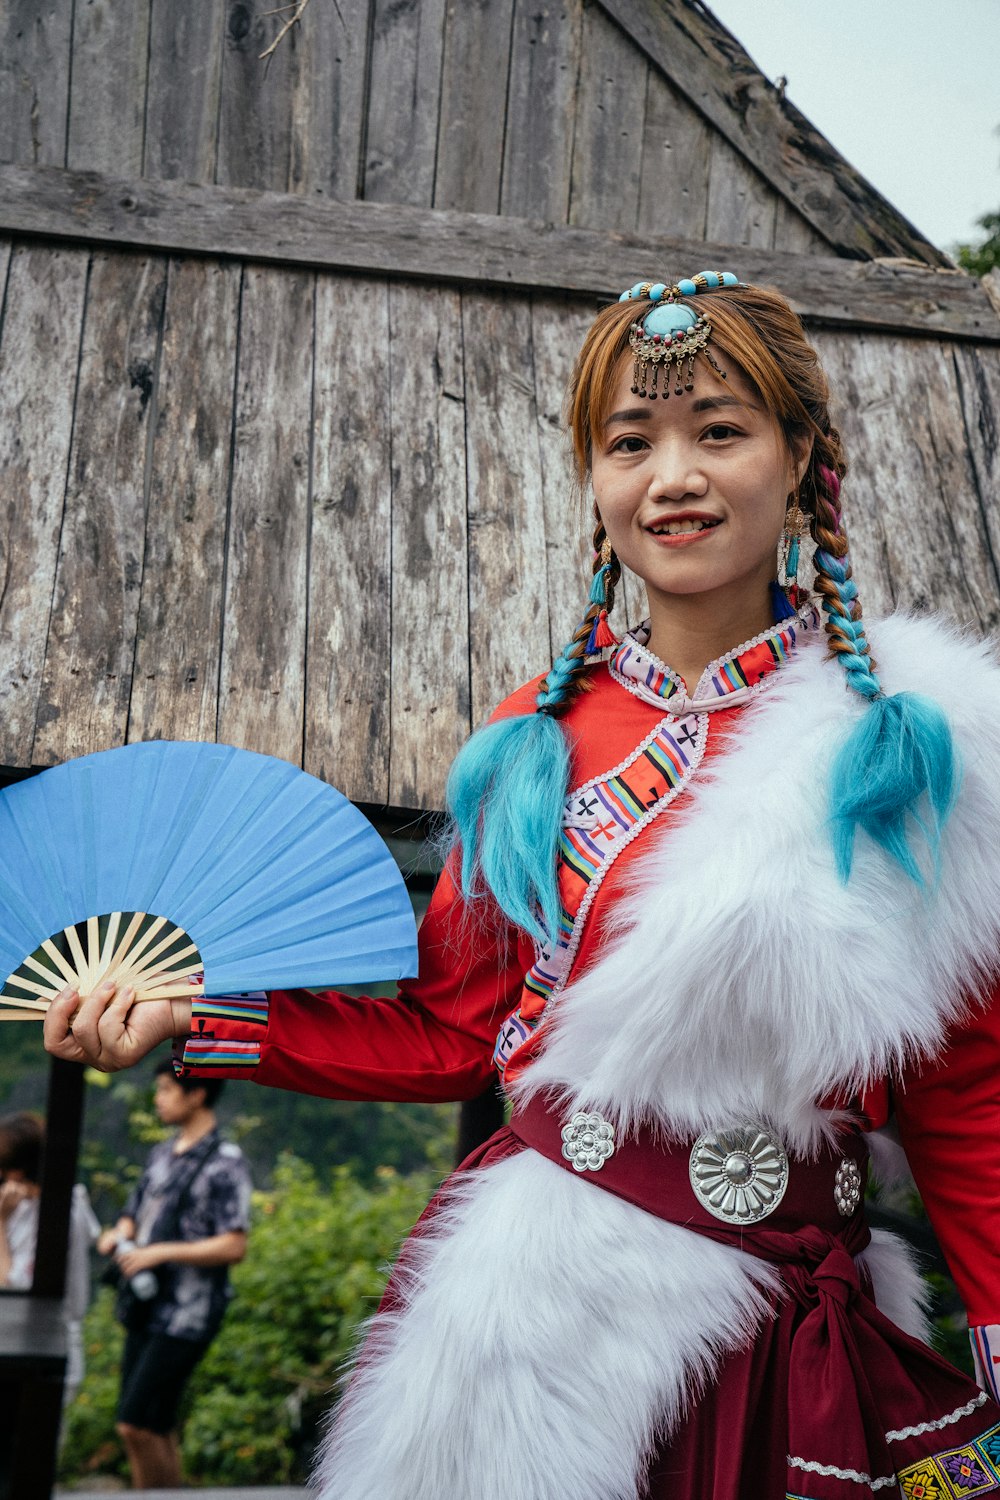 a woman in a costume holding a blue fan